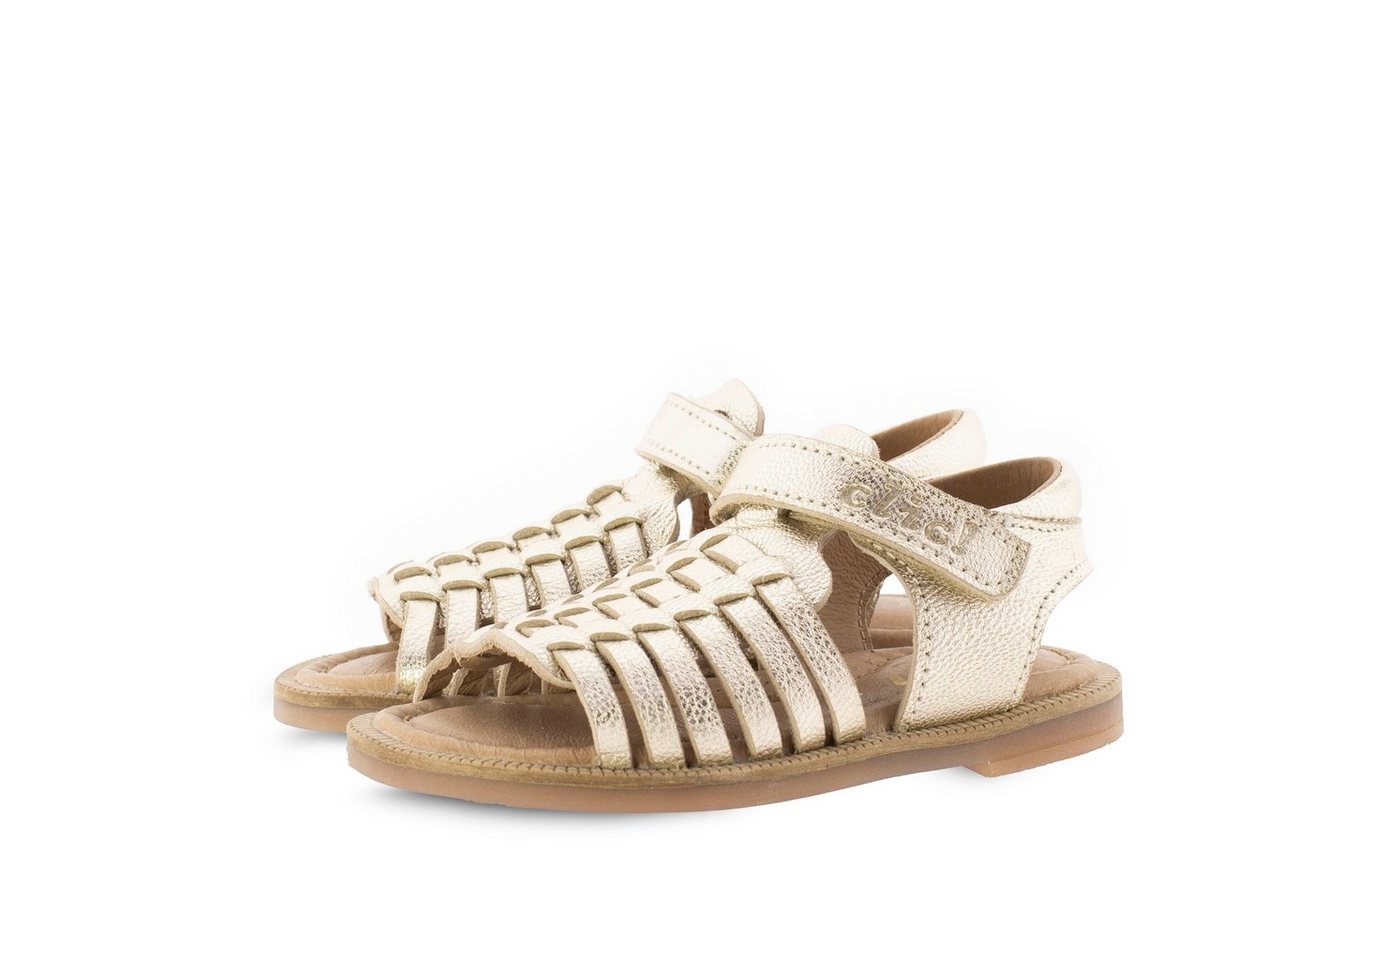 Clic Clic Sandalen Schuhe Mädchen Klett Leder Gold 20686 Sandalette von Clic